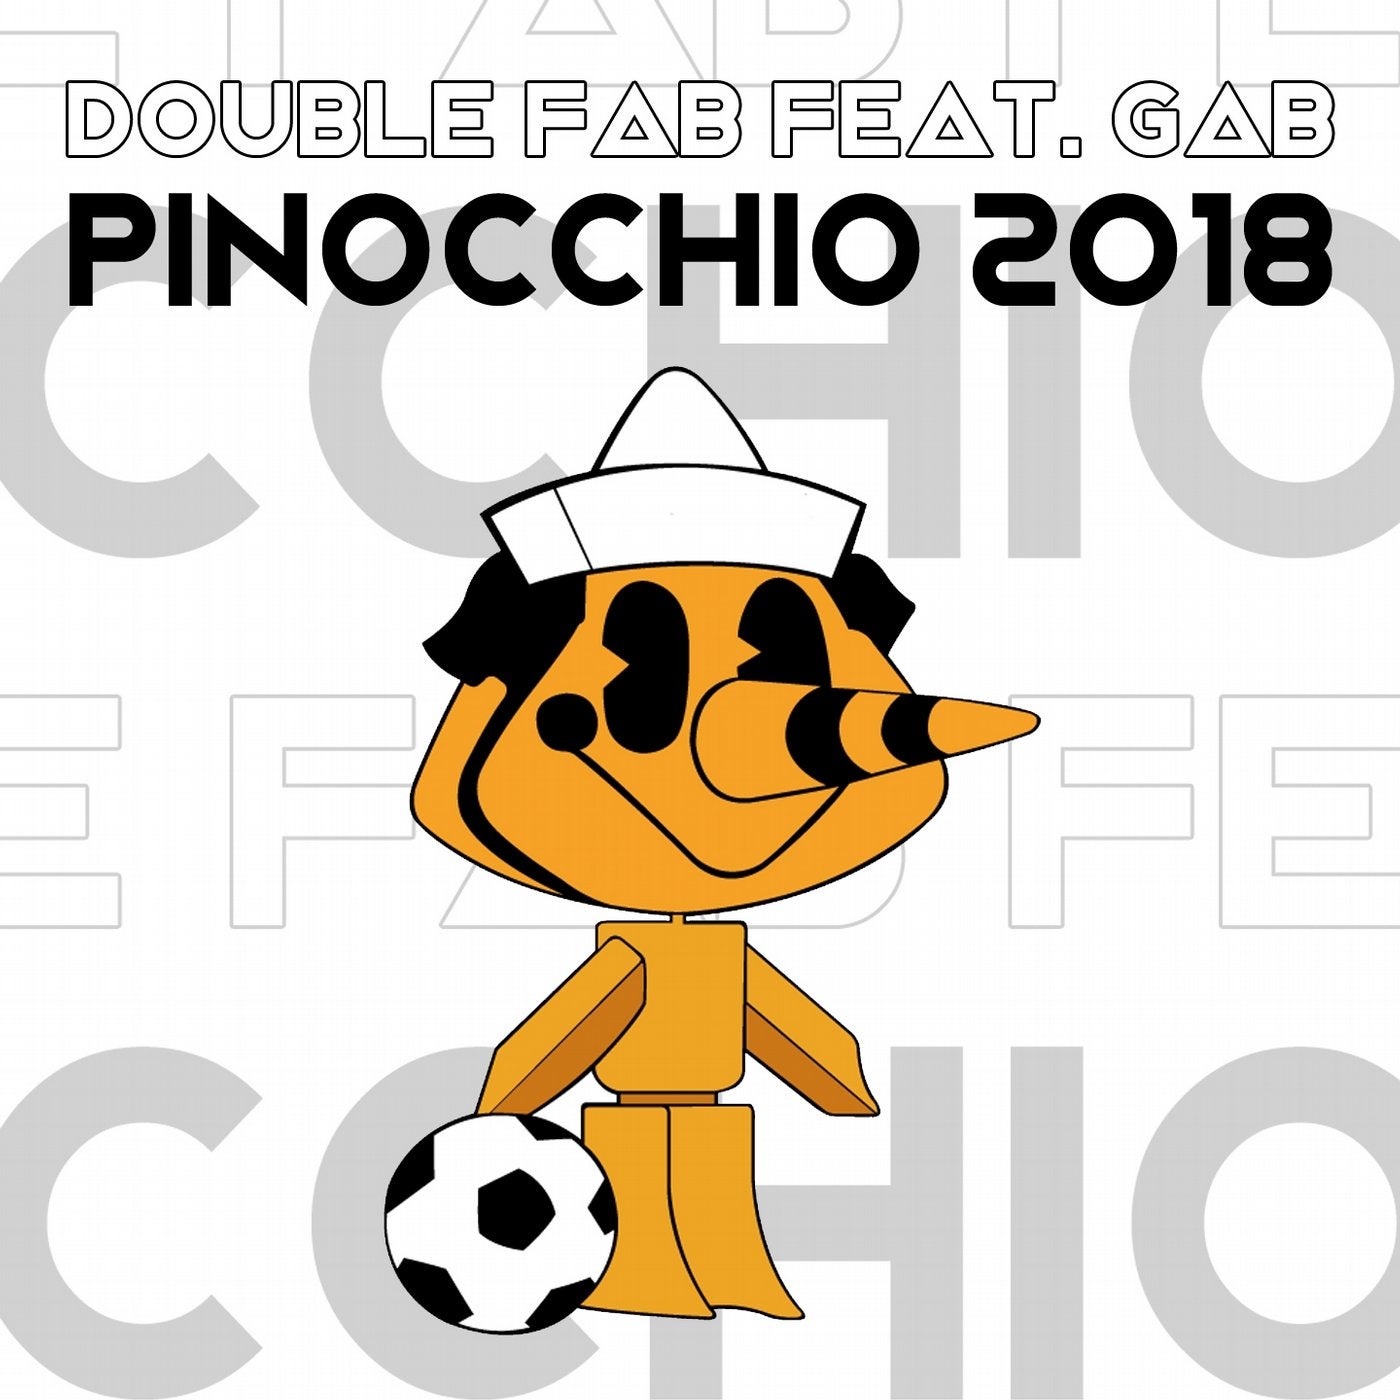 Pinocchio 2018 (feat. Gab)